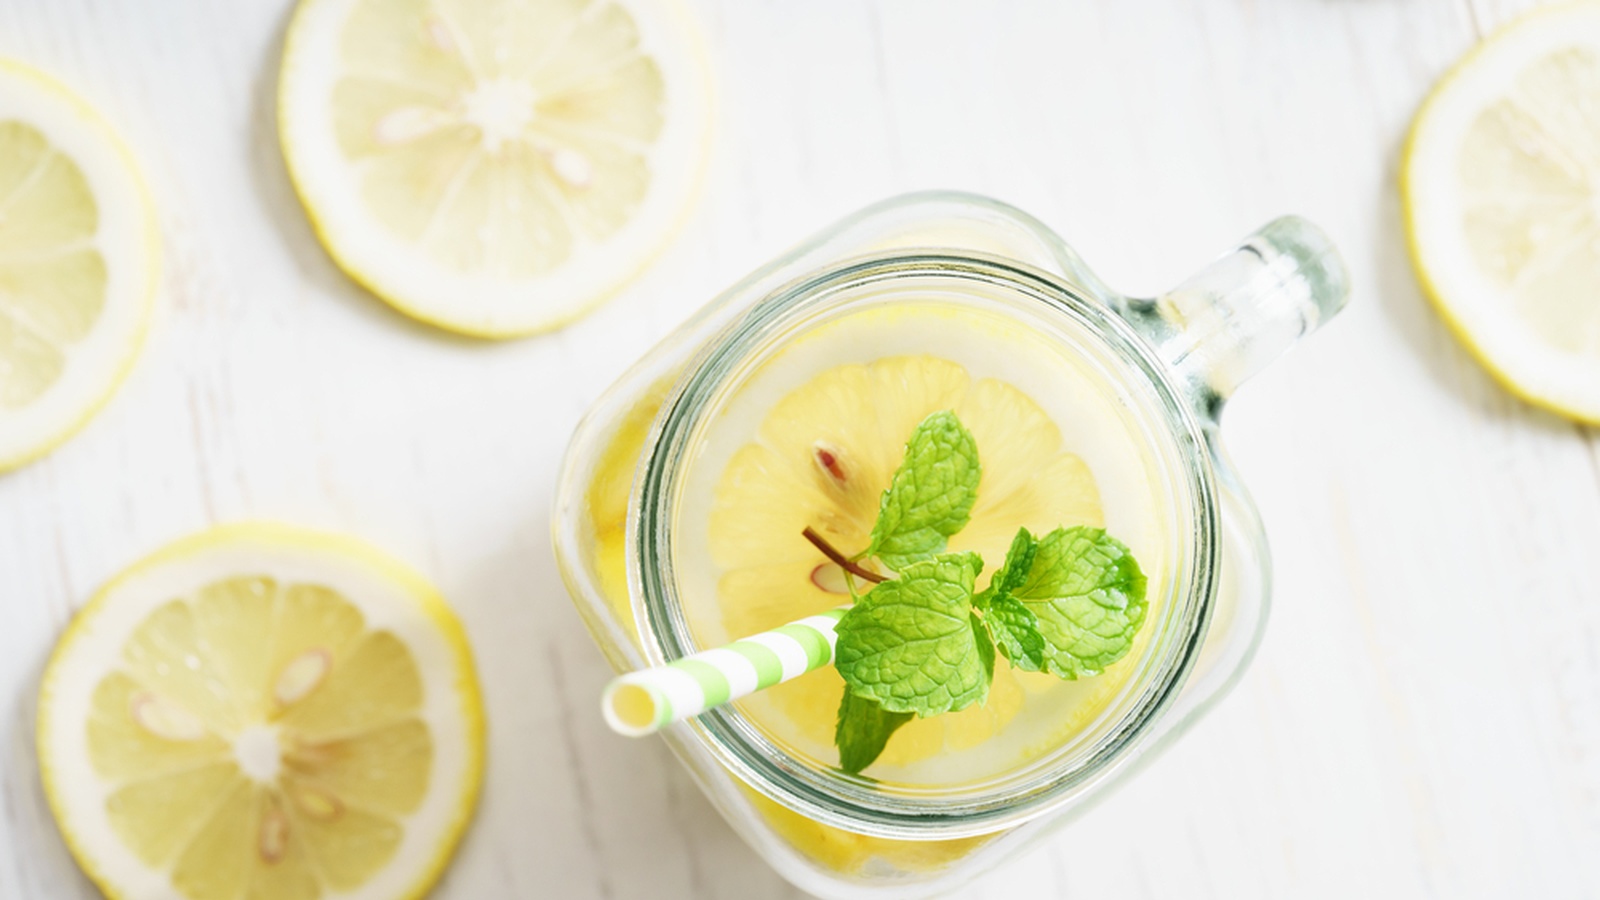 Homemade Cultured Lemonade